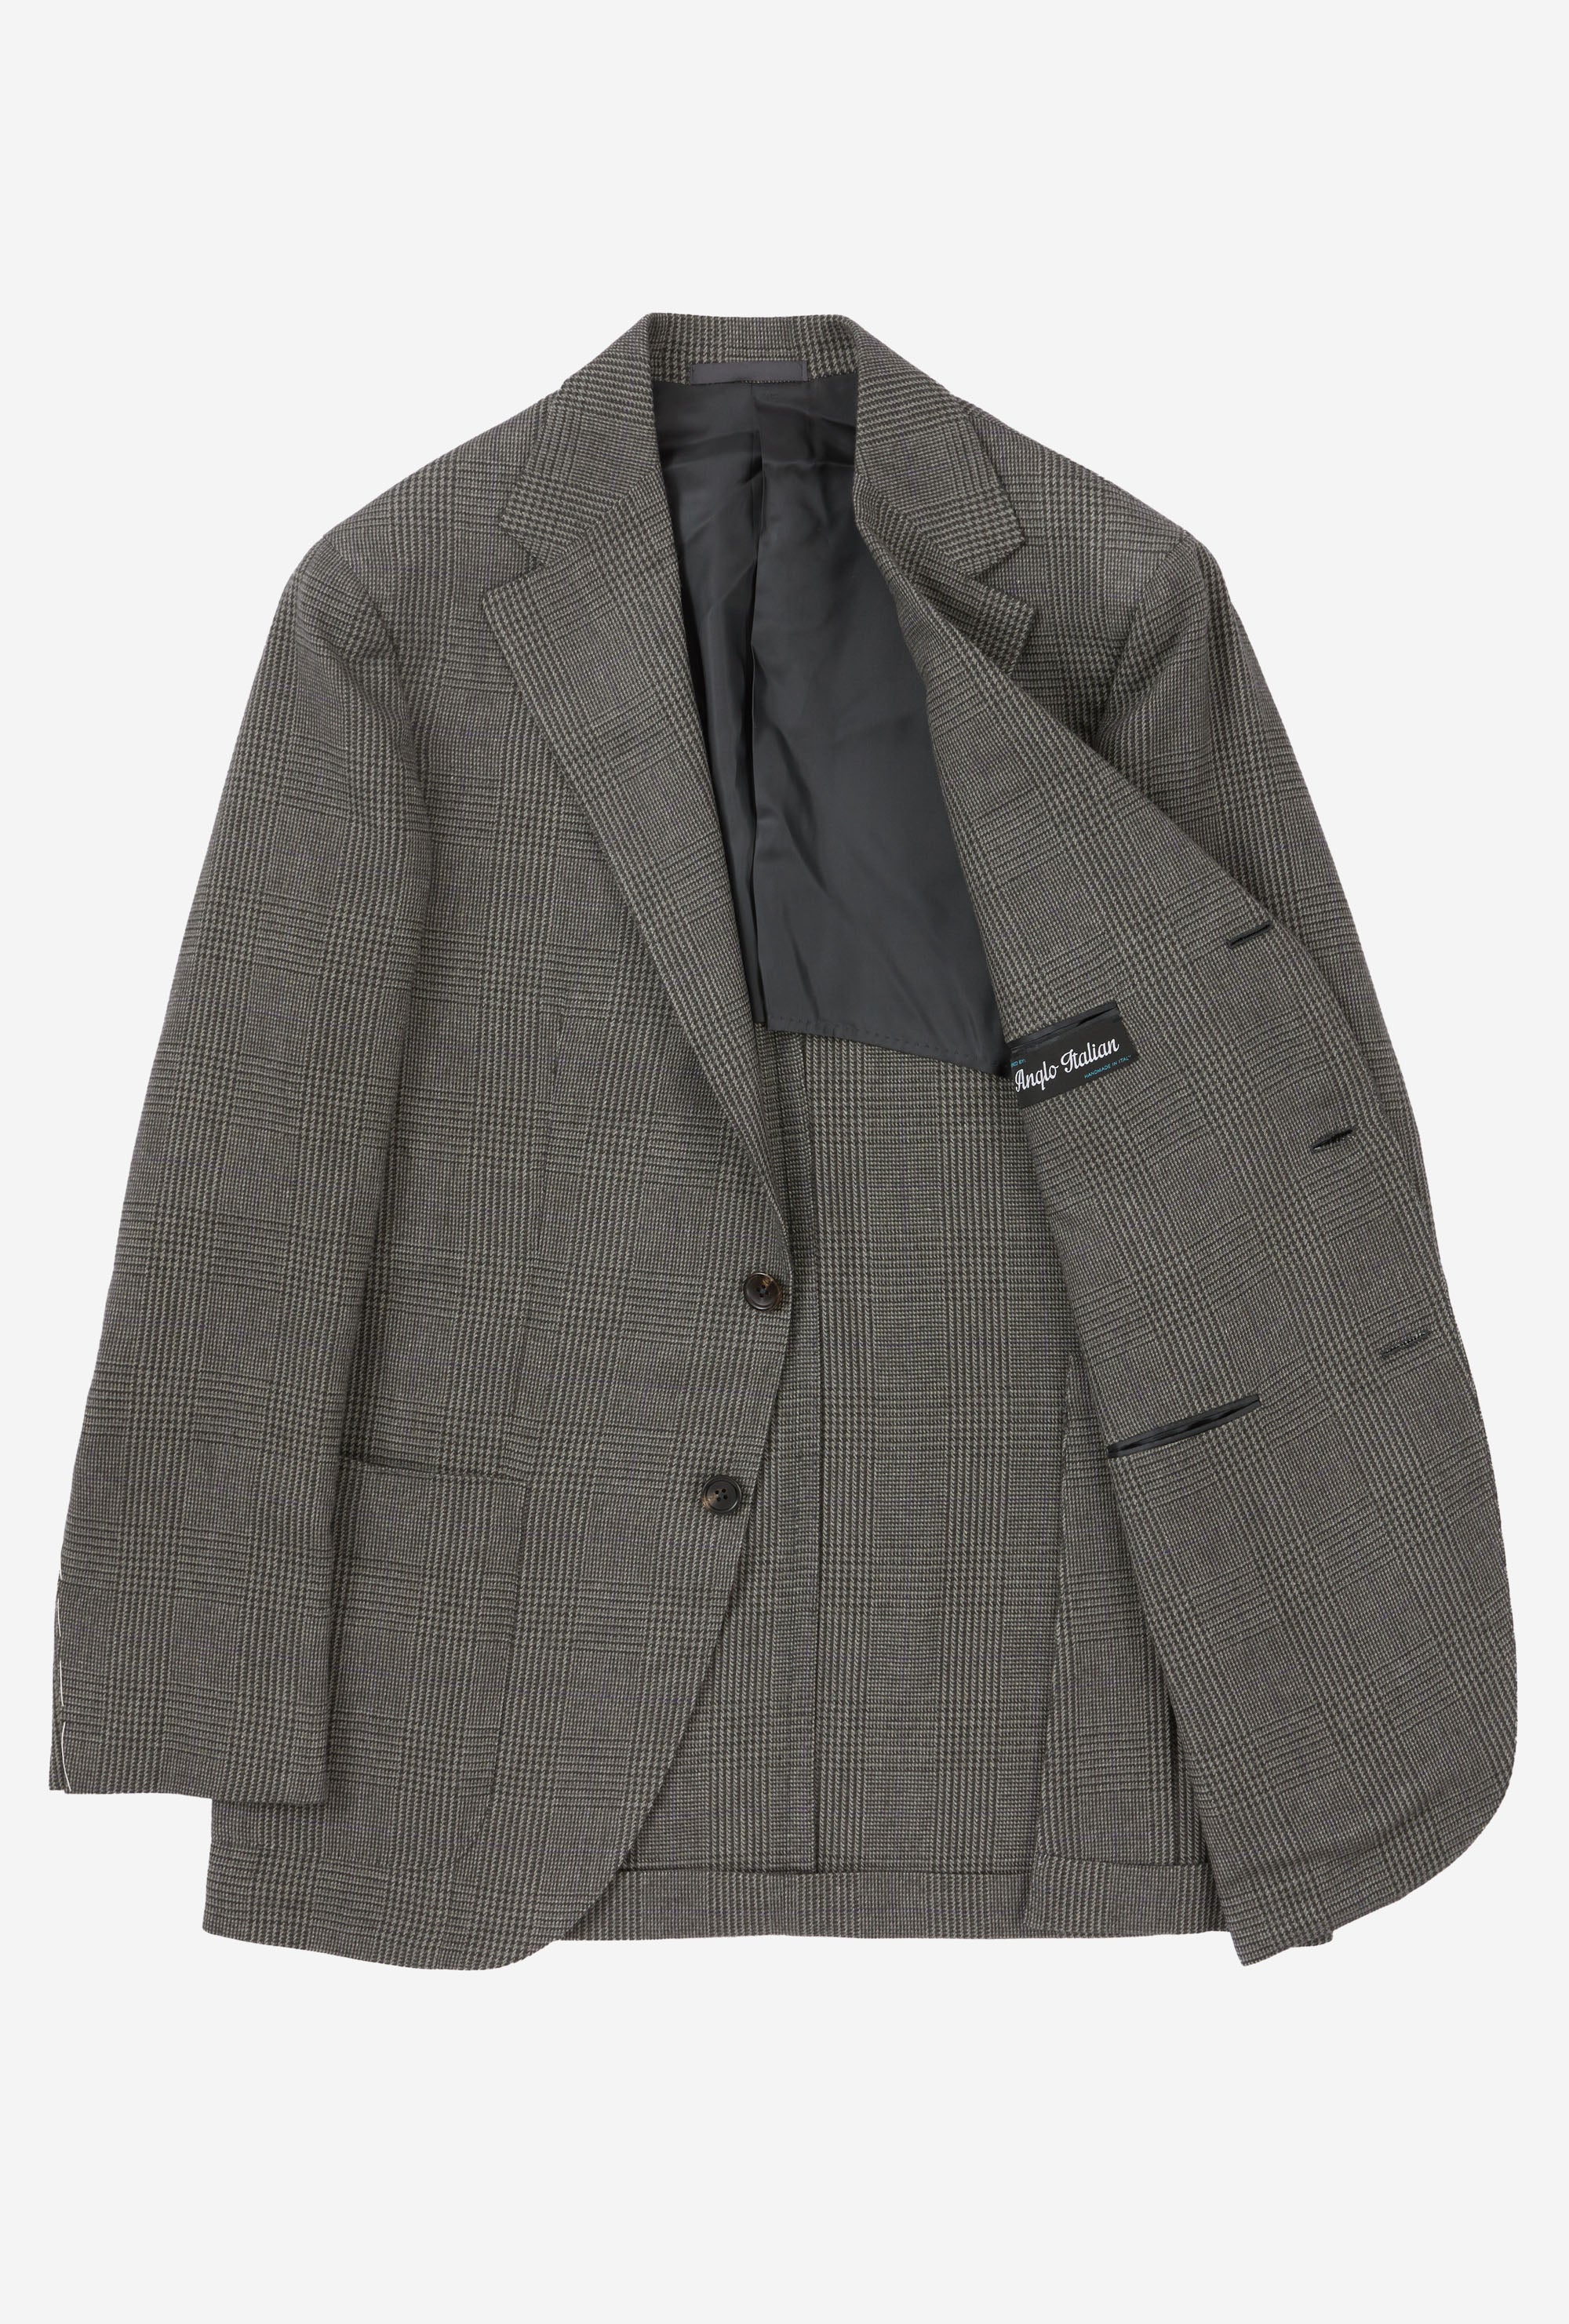 Sport Jacket Wool Glen Plaid Grey Purple Overcheck